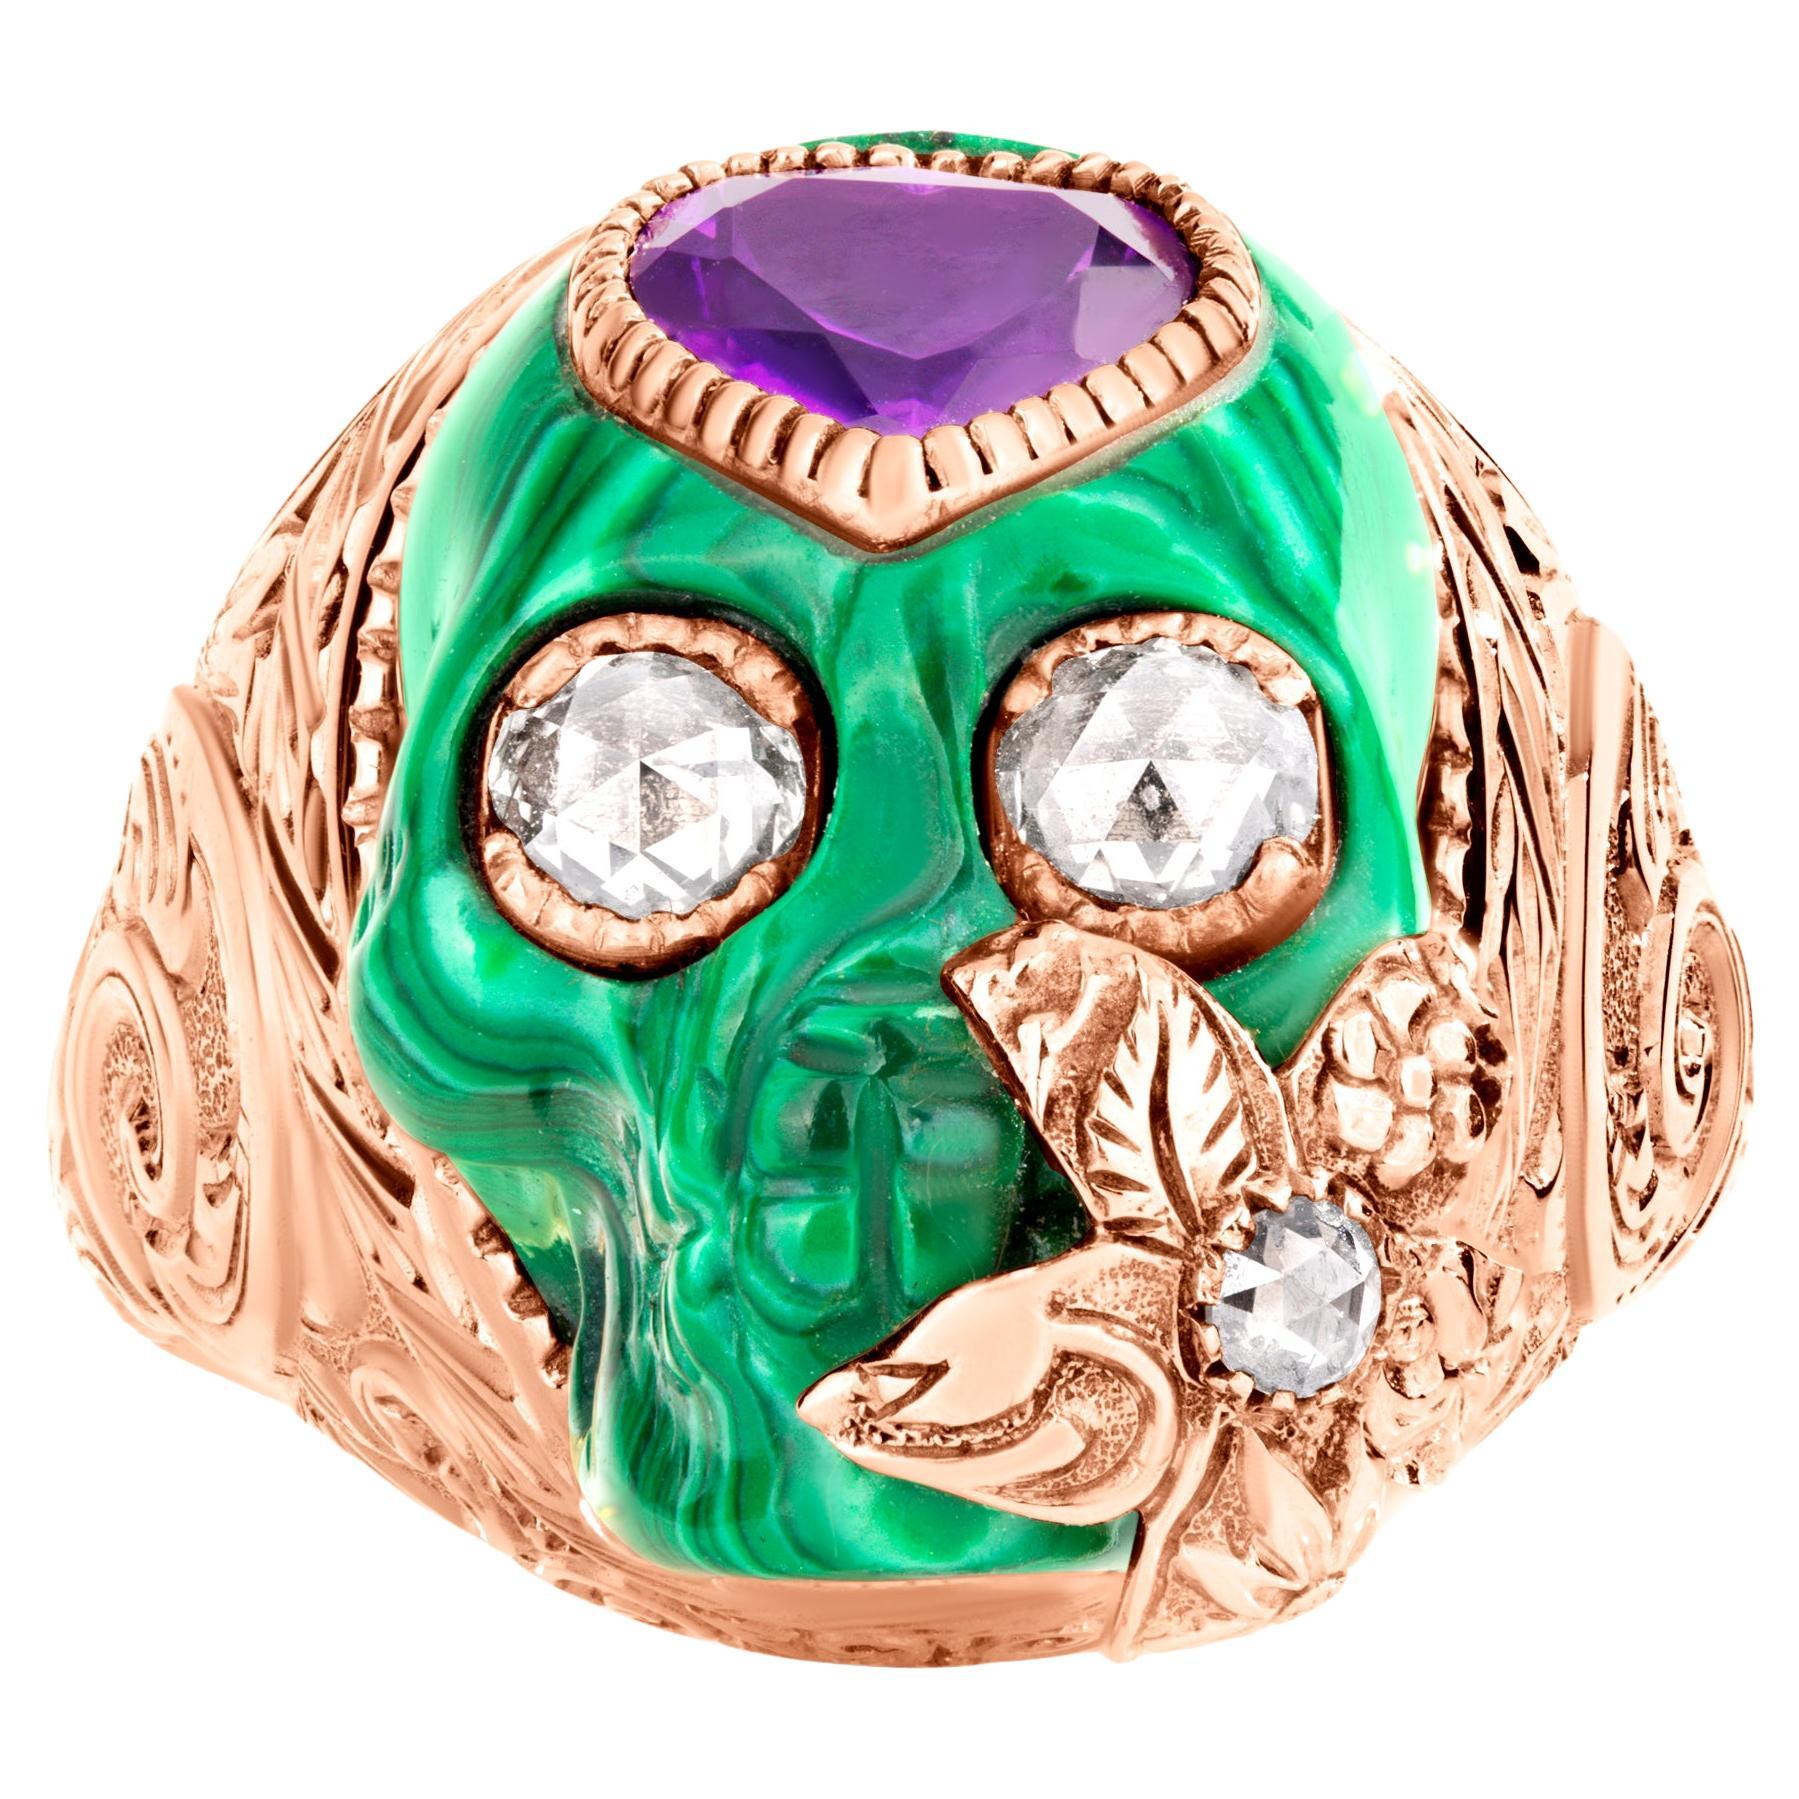 Gucci 7ctw. Malachite Amethyst Skull Ring with Rose Cut Diamond Eye in 18k Gold 